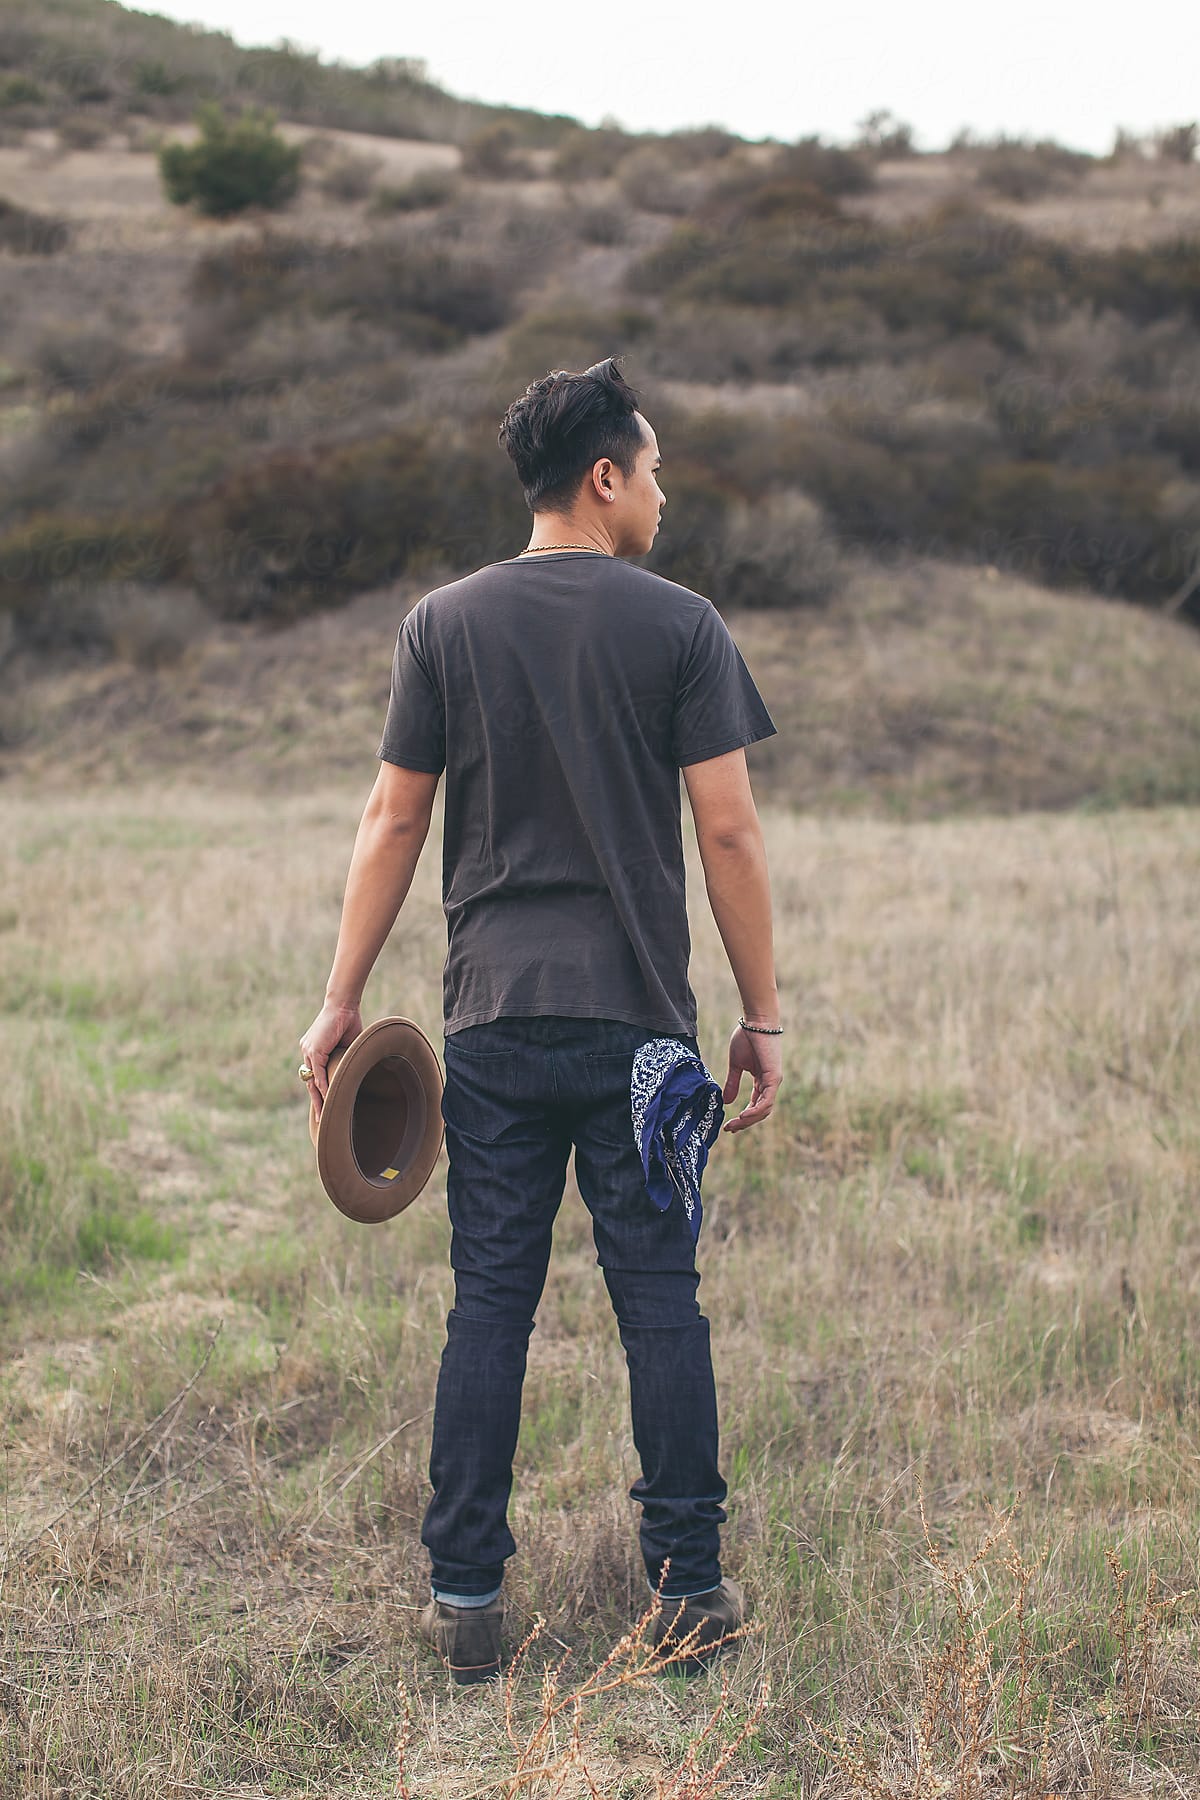 A man wearing jeans a hat walking through an open field.